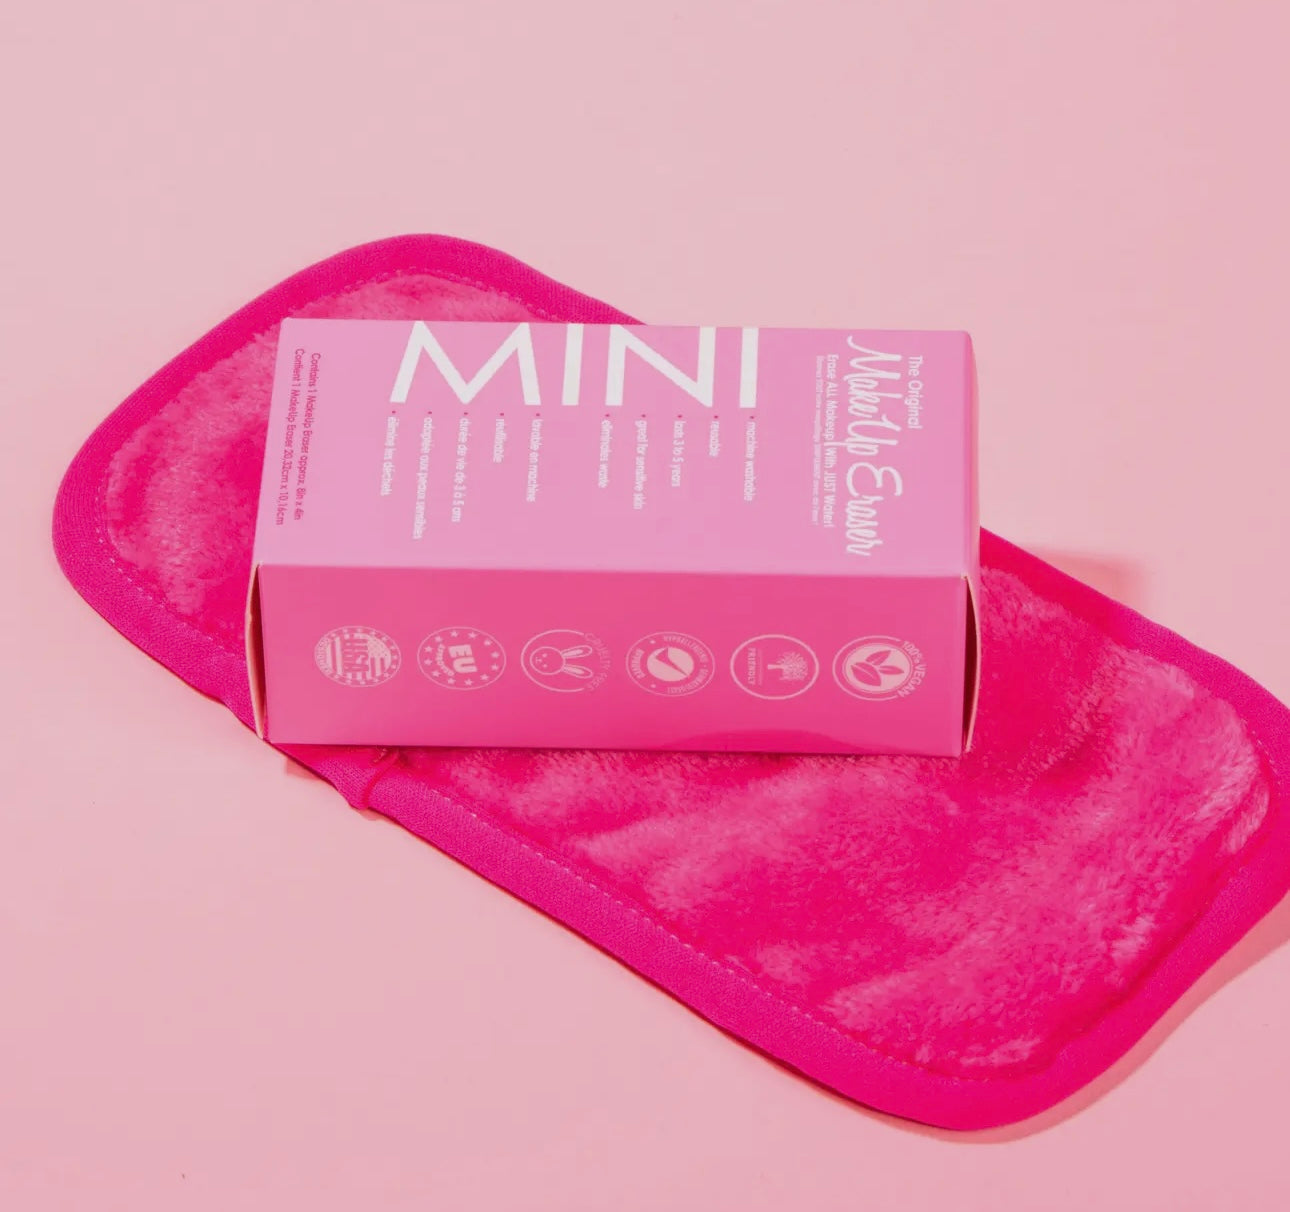 The original make up eraser mini